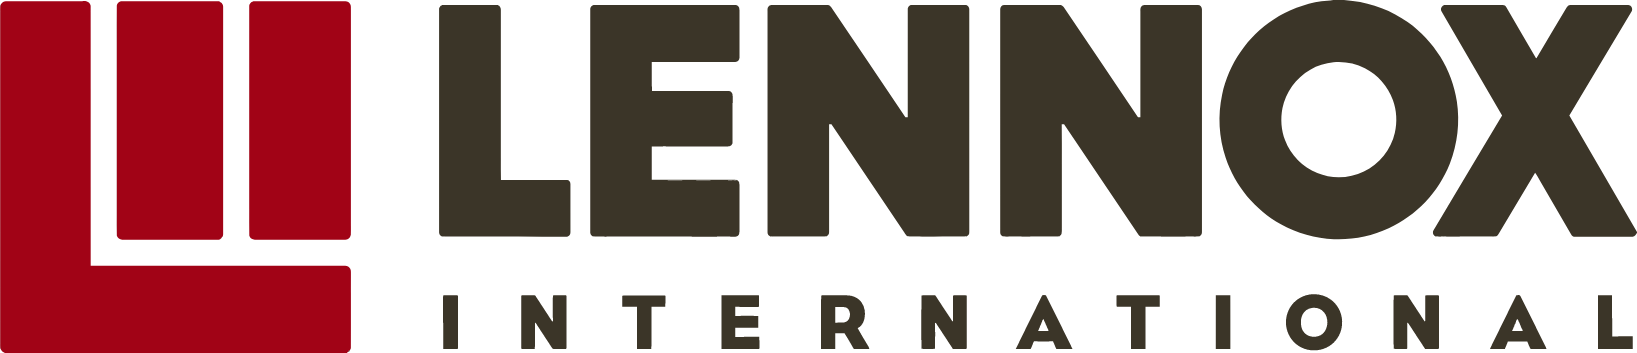 Lennox logo large (transparent PNG)